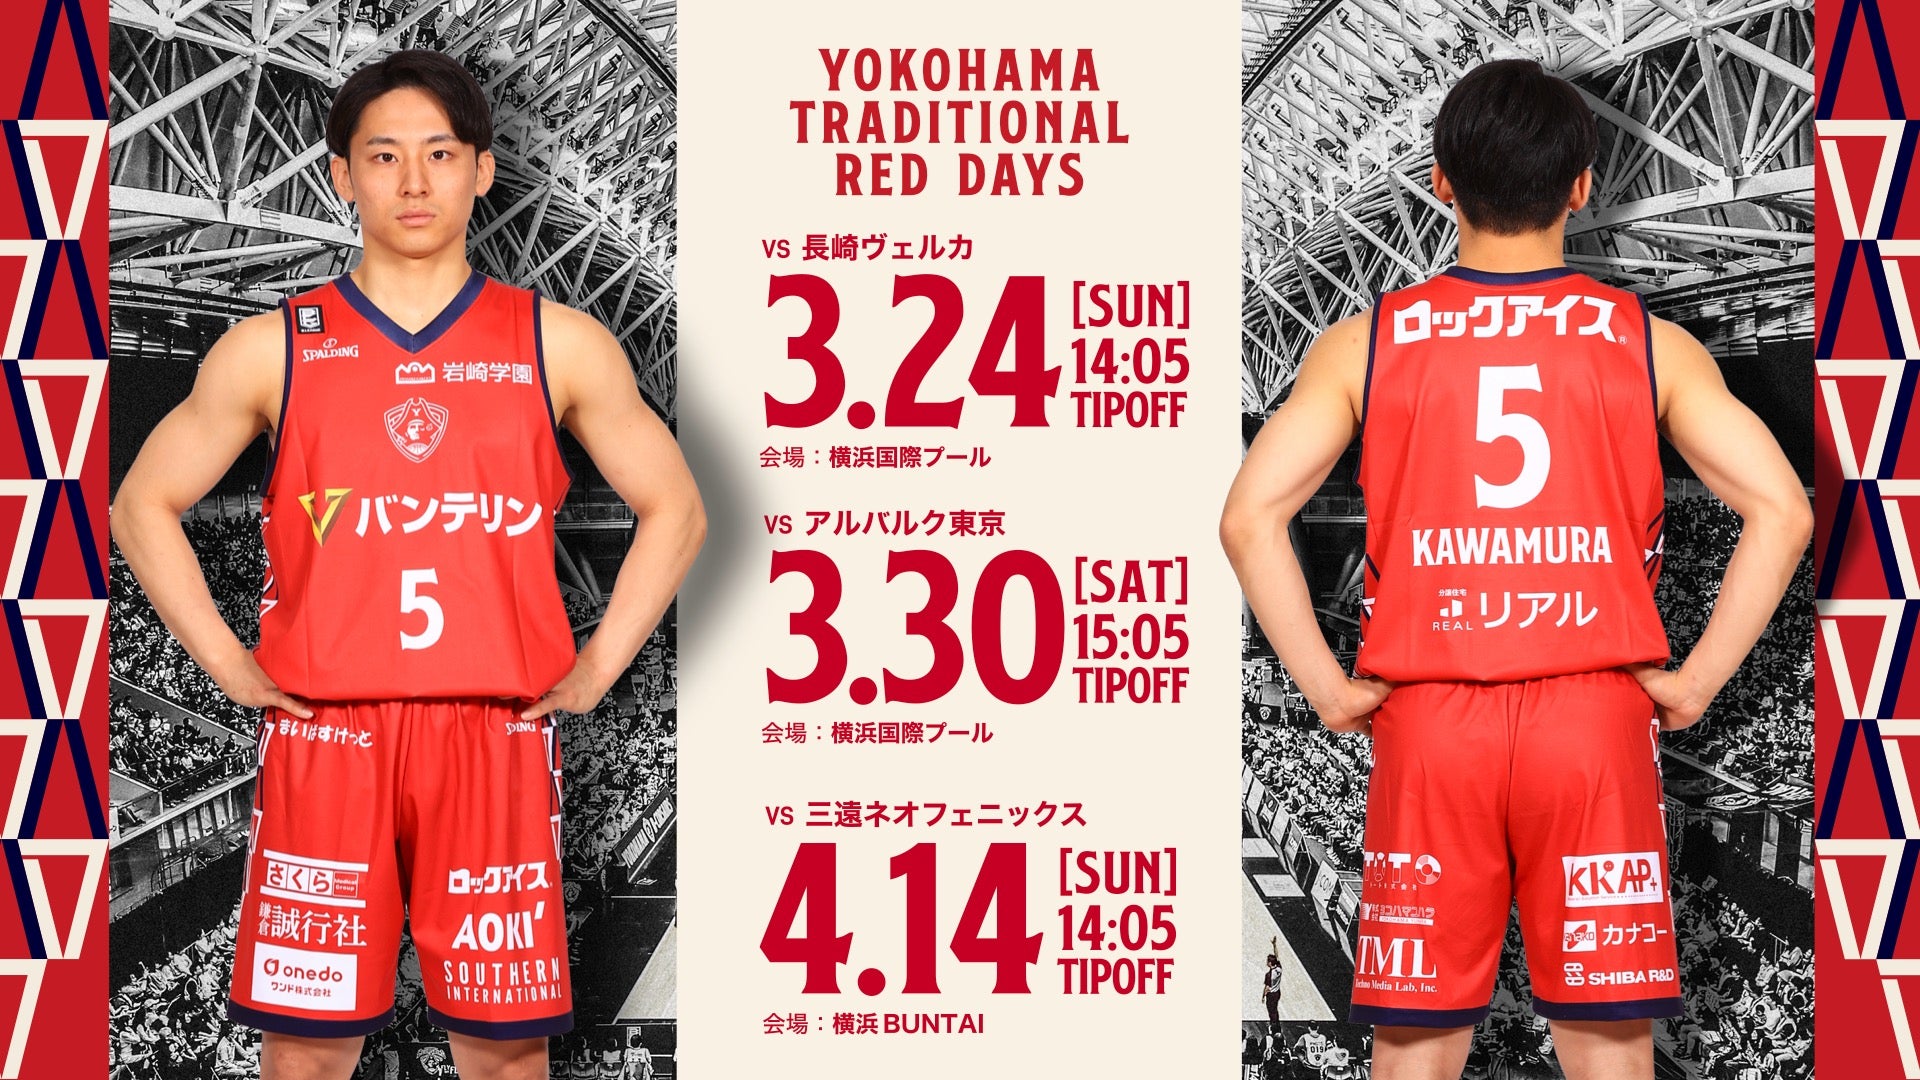 YOKOHAMA TRADITIONAL RED DAY